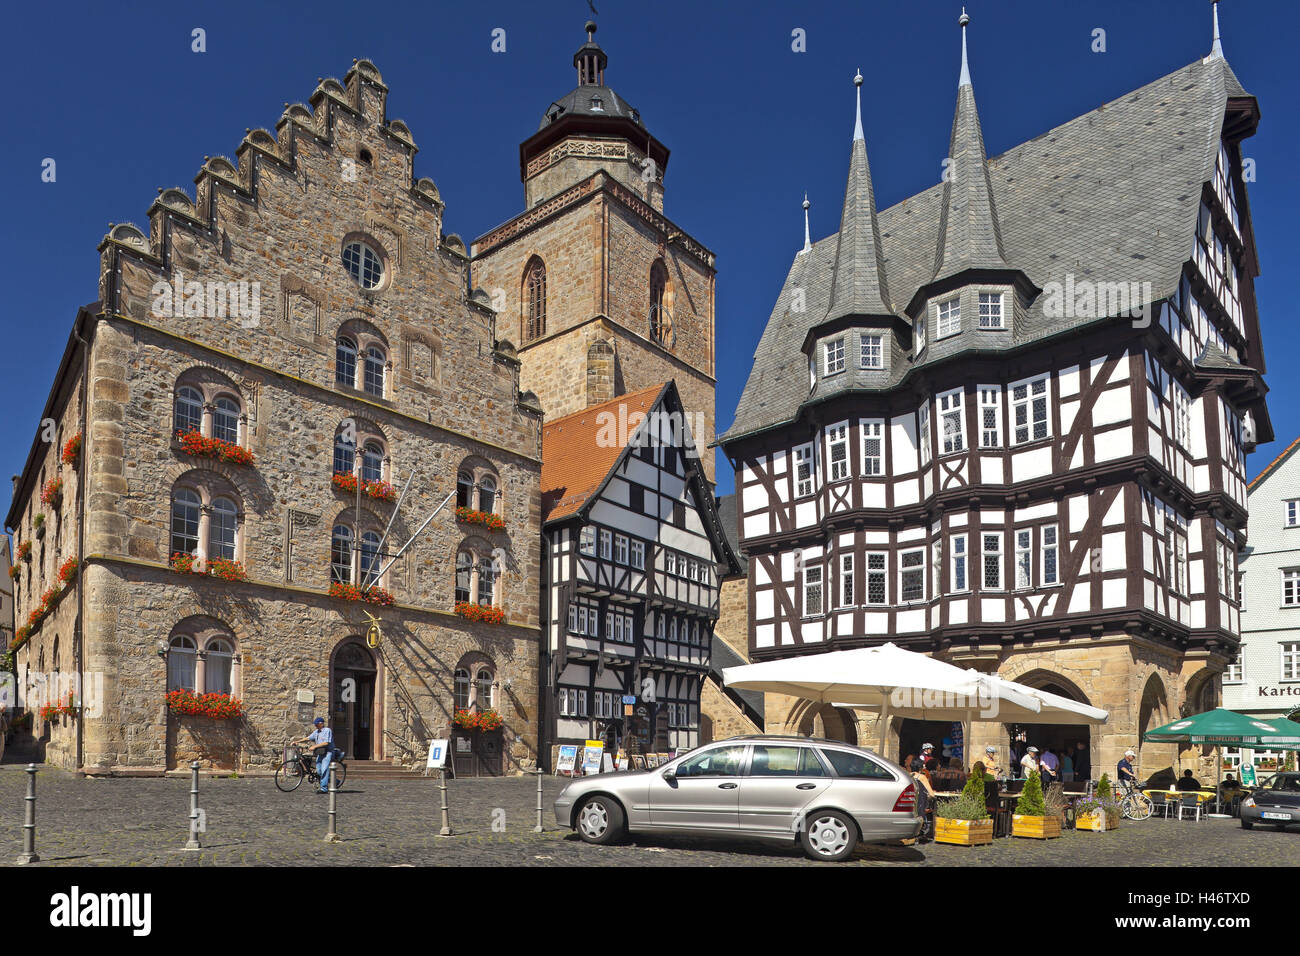 Germany, Hessen, Northern Hessen, field Als, marketplace, city hall, whale pure G sharp church, Stock Photo